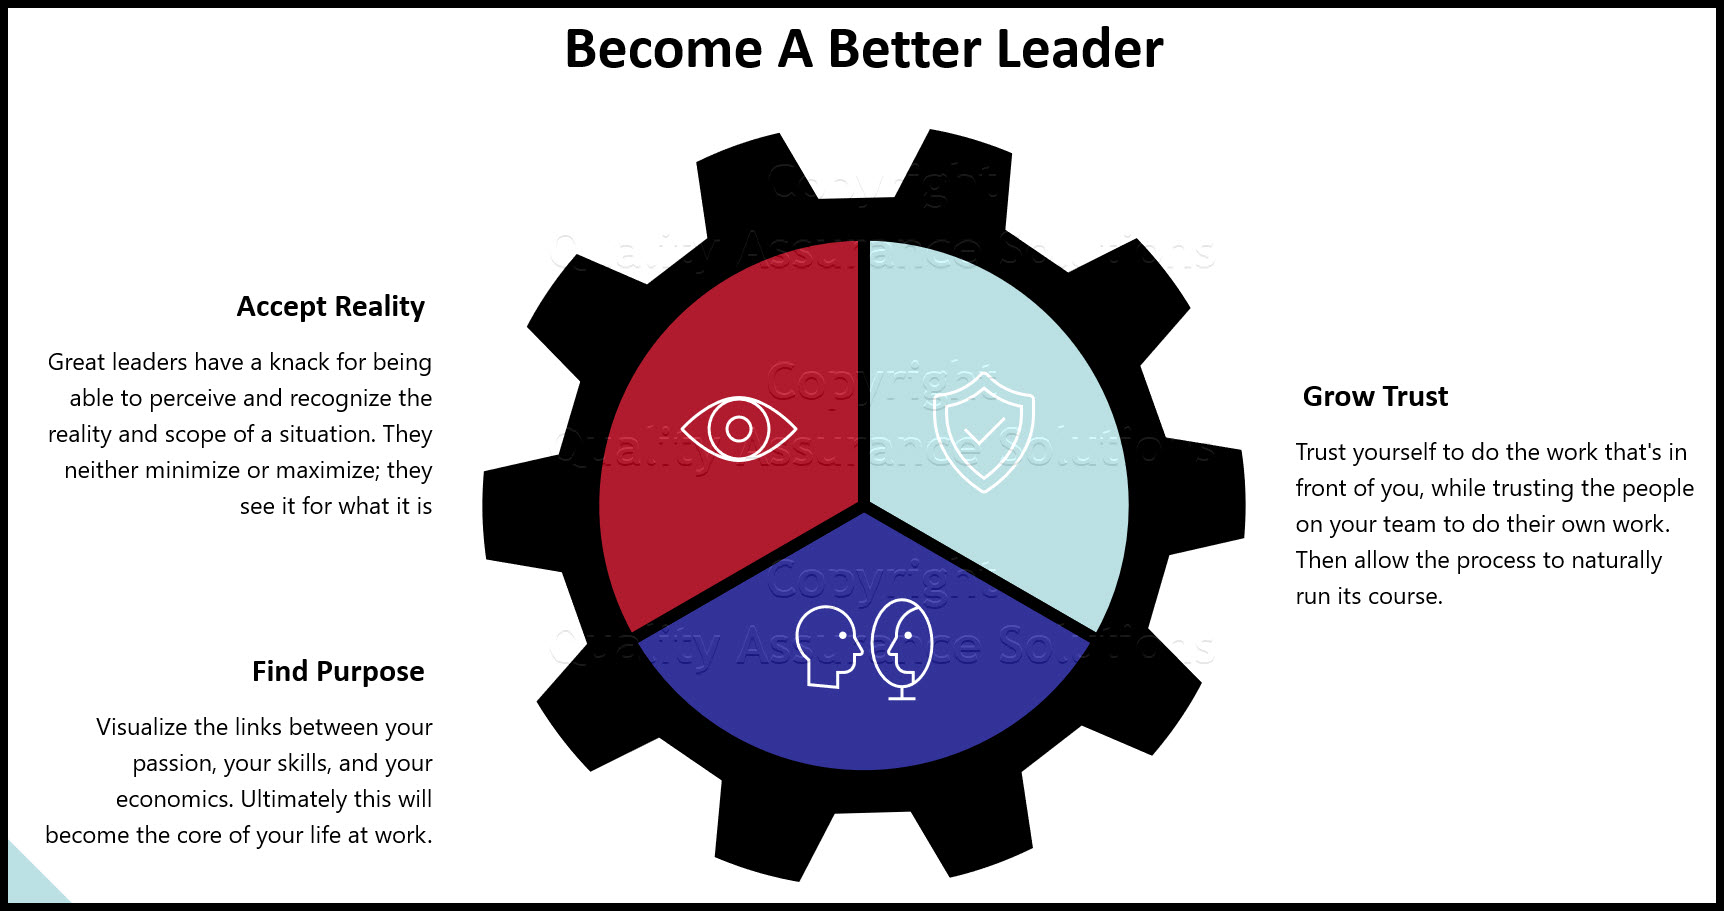 Becoming a Better Leader slide